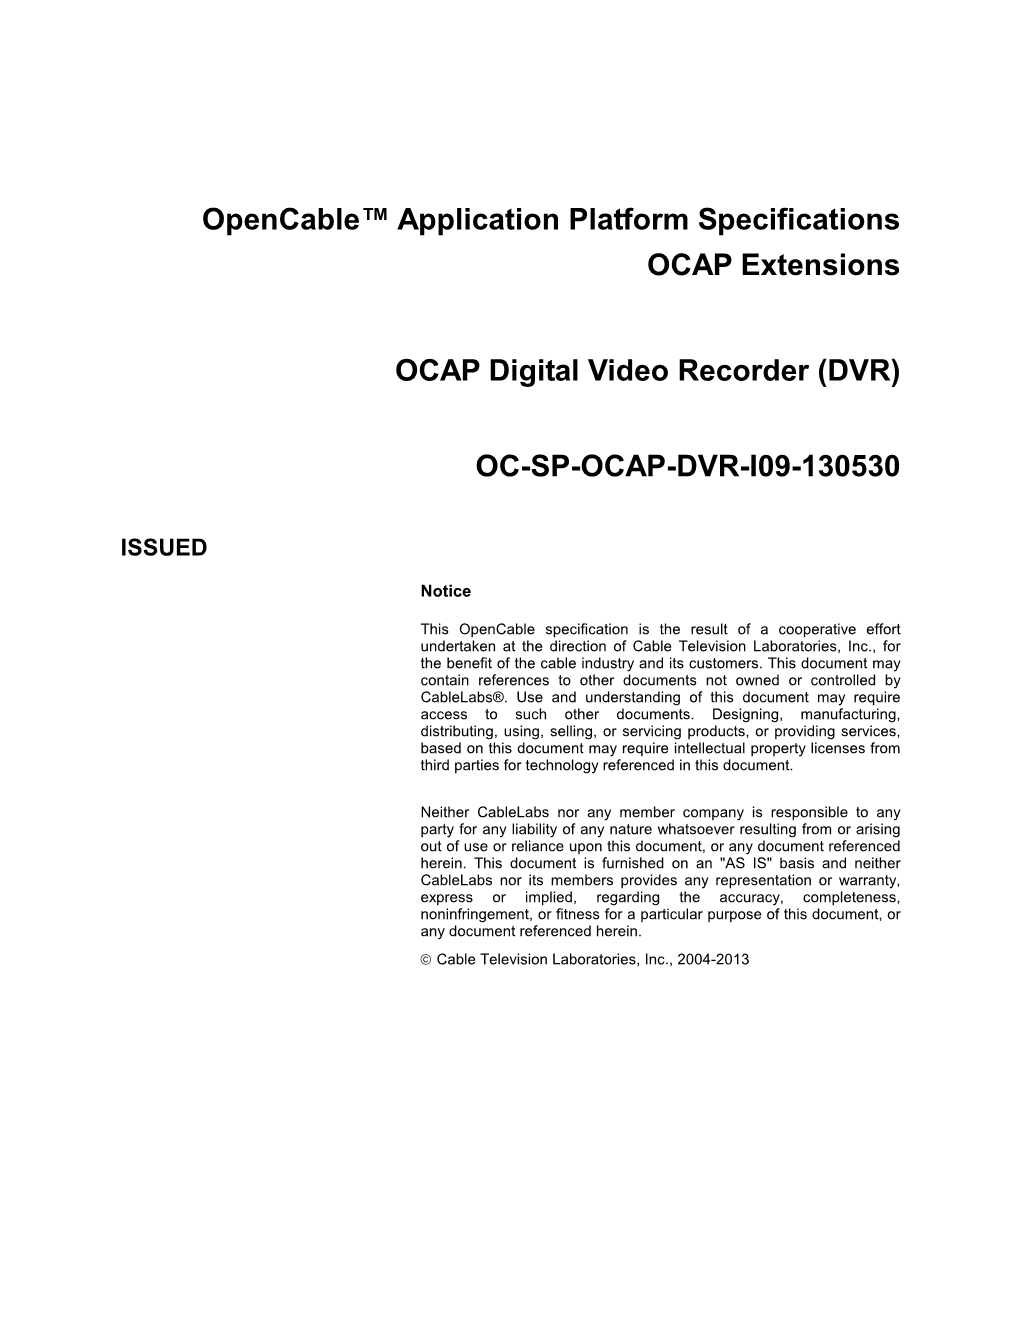 Opencable™ Application Platform Specifications OCAP Extensions OCAP Digital Video Recorder (DVR) OC-SP-OCAP-DVR-I09-130530